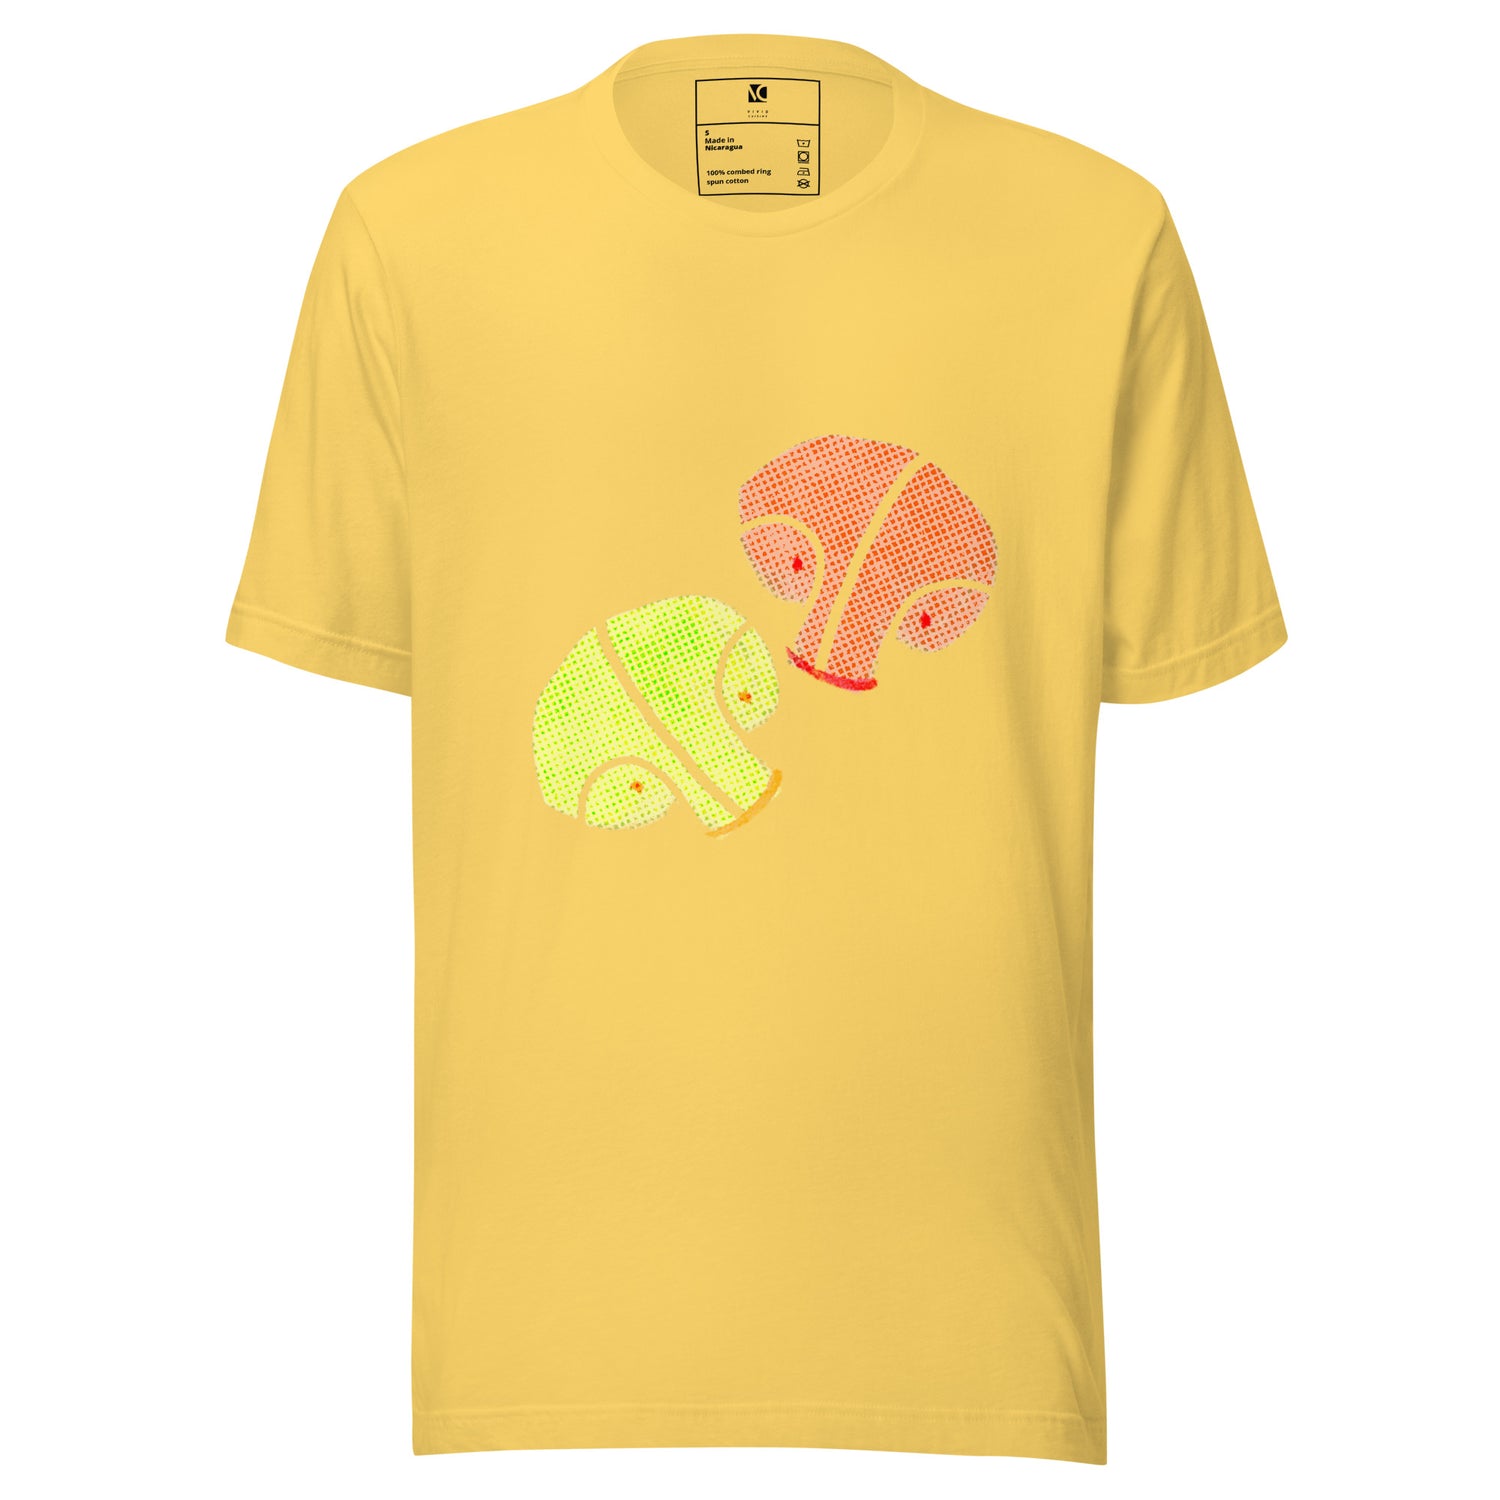 Champiñiones - Unisex T-Shirt